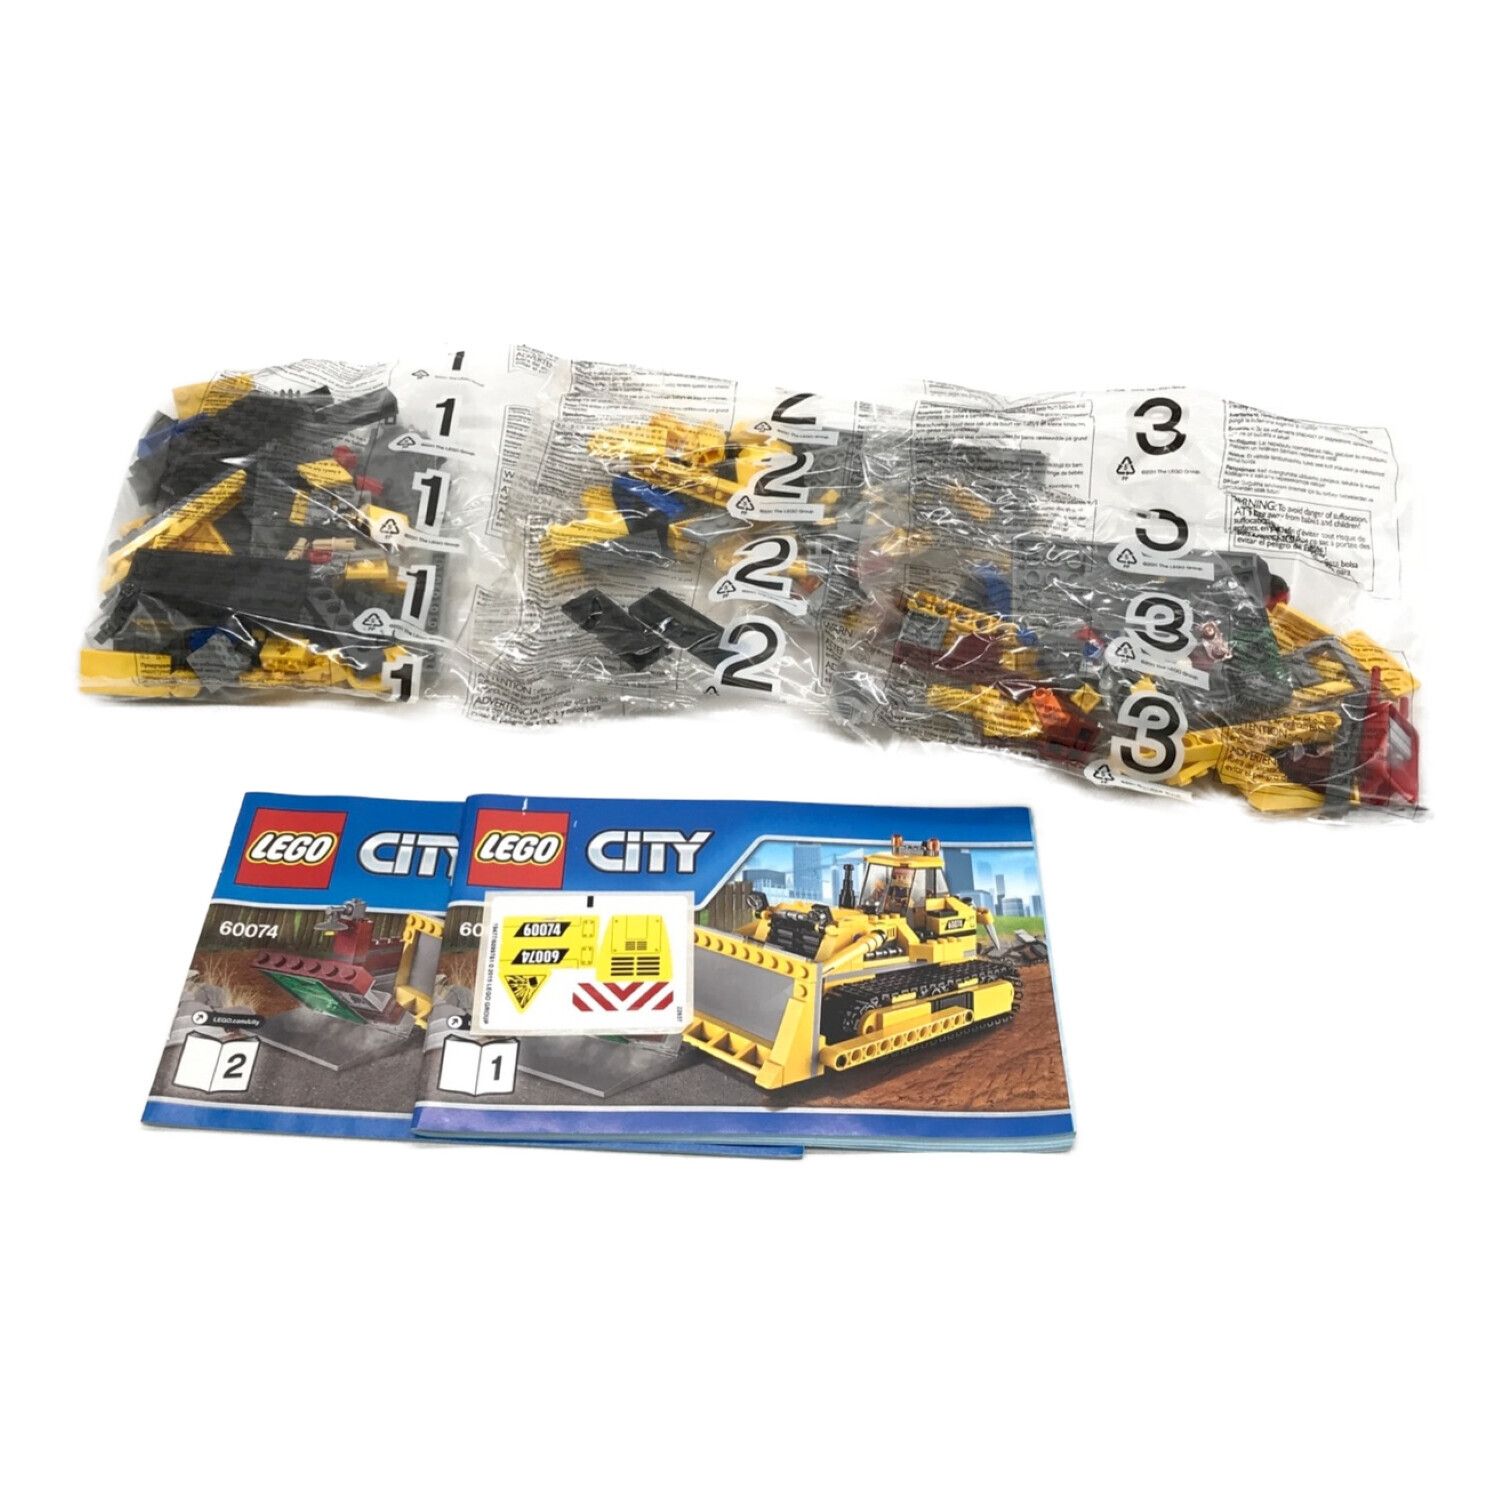 LEGO (レゴ) レゴブロック パワフルブルドーザー 60074 